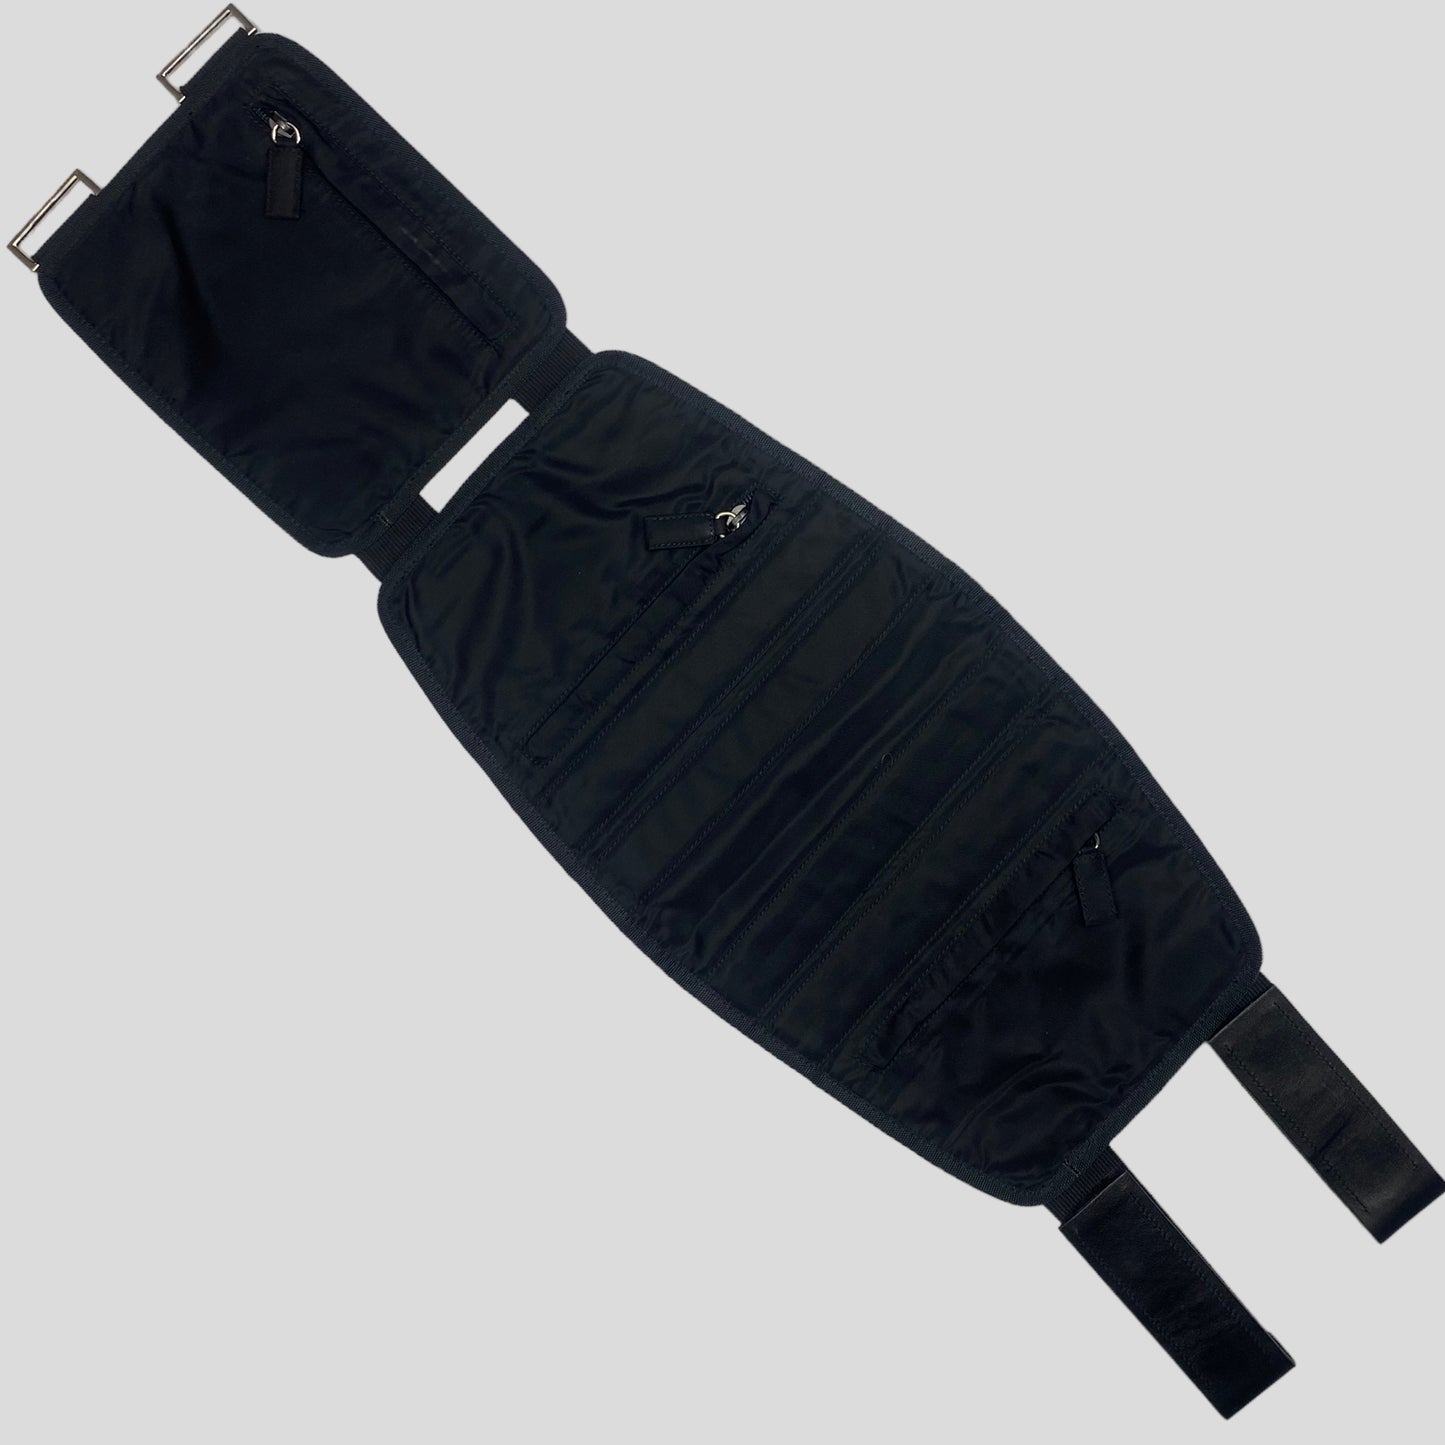 Prada 1999 Nylon Tactical Belt Bag - XS/S